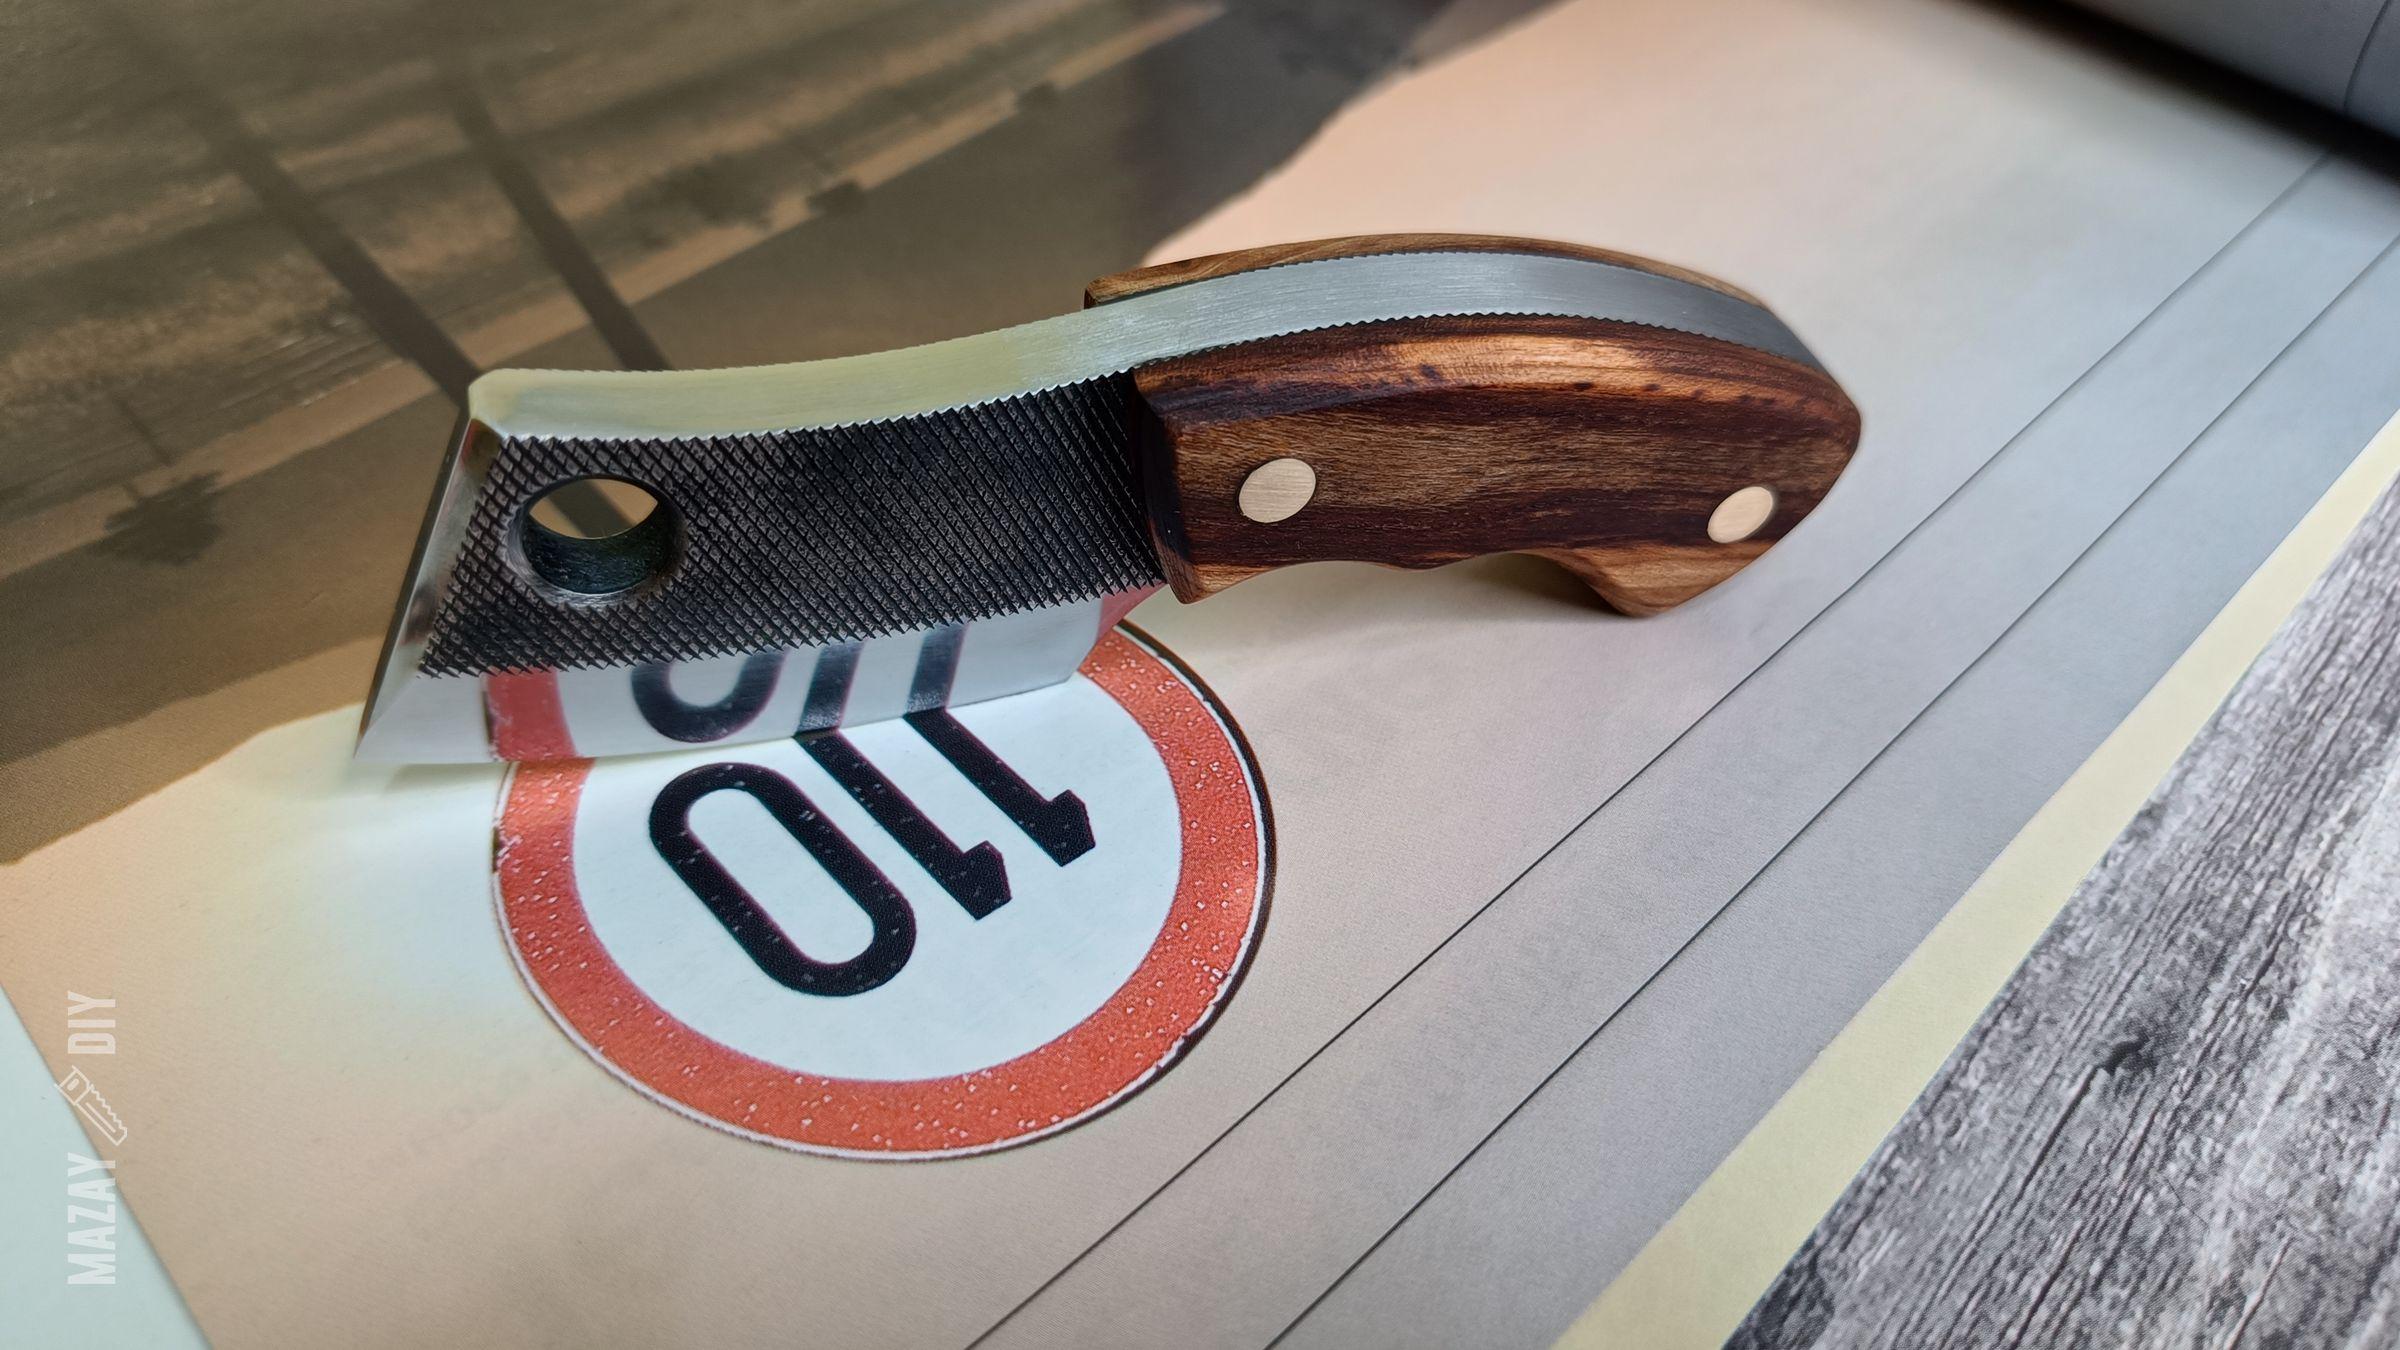 Mini cleaver knife 3d model